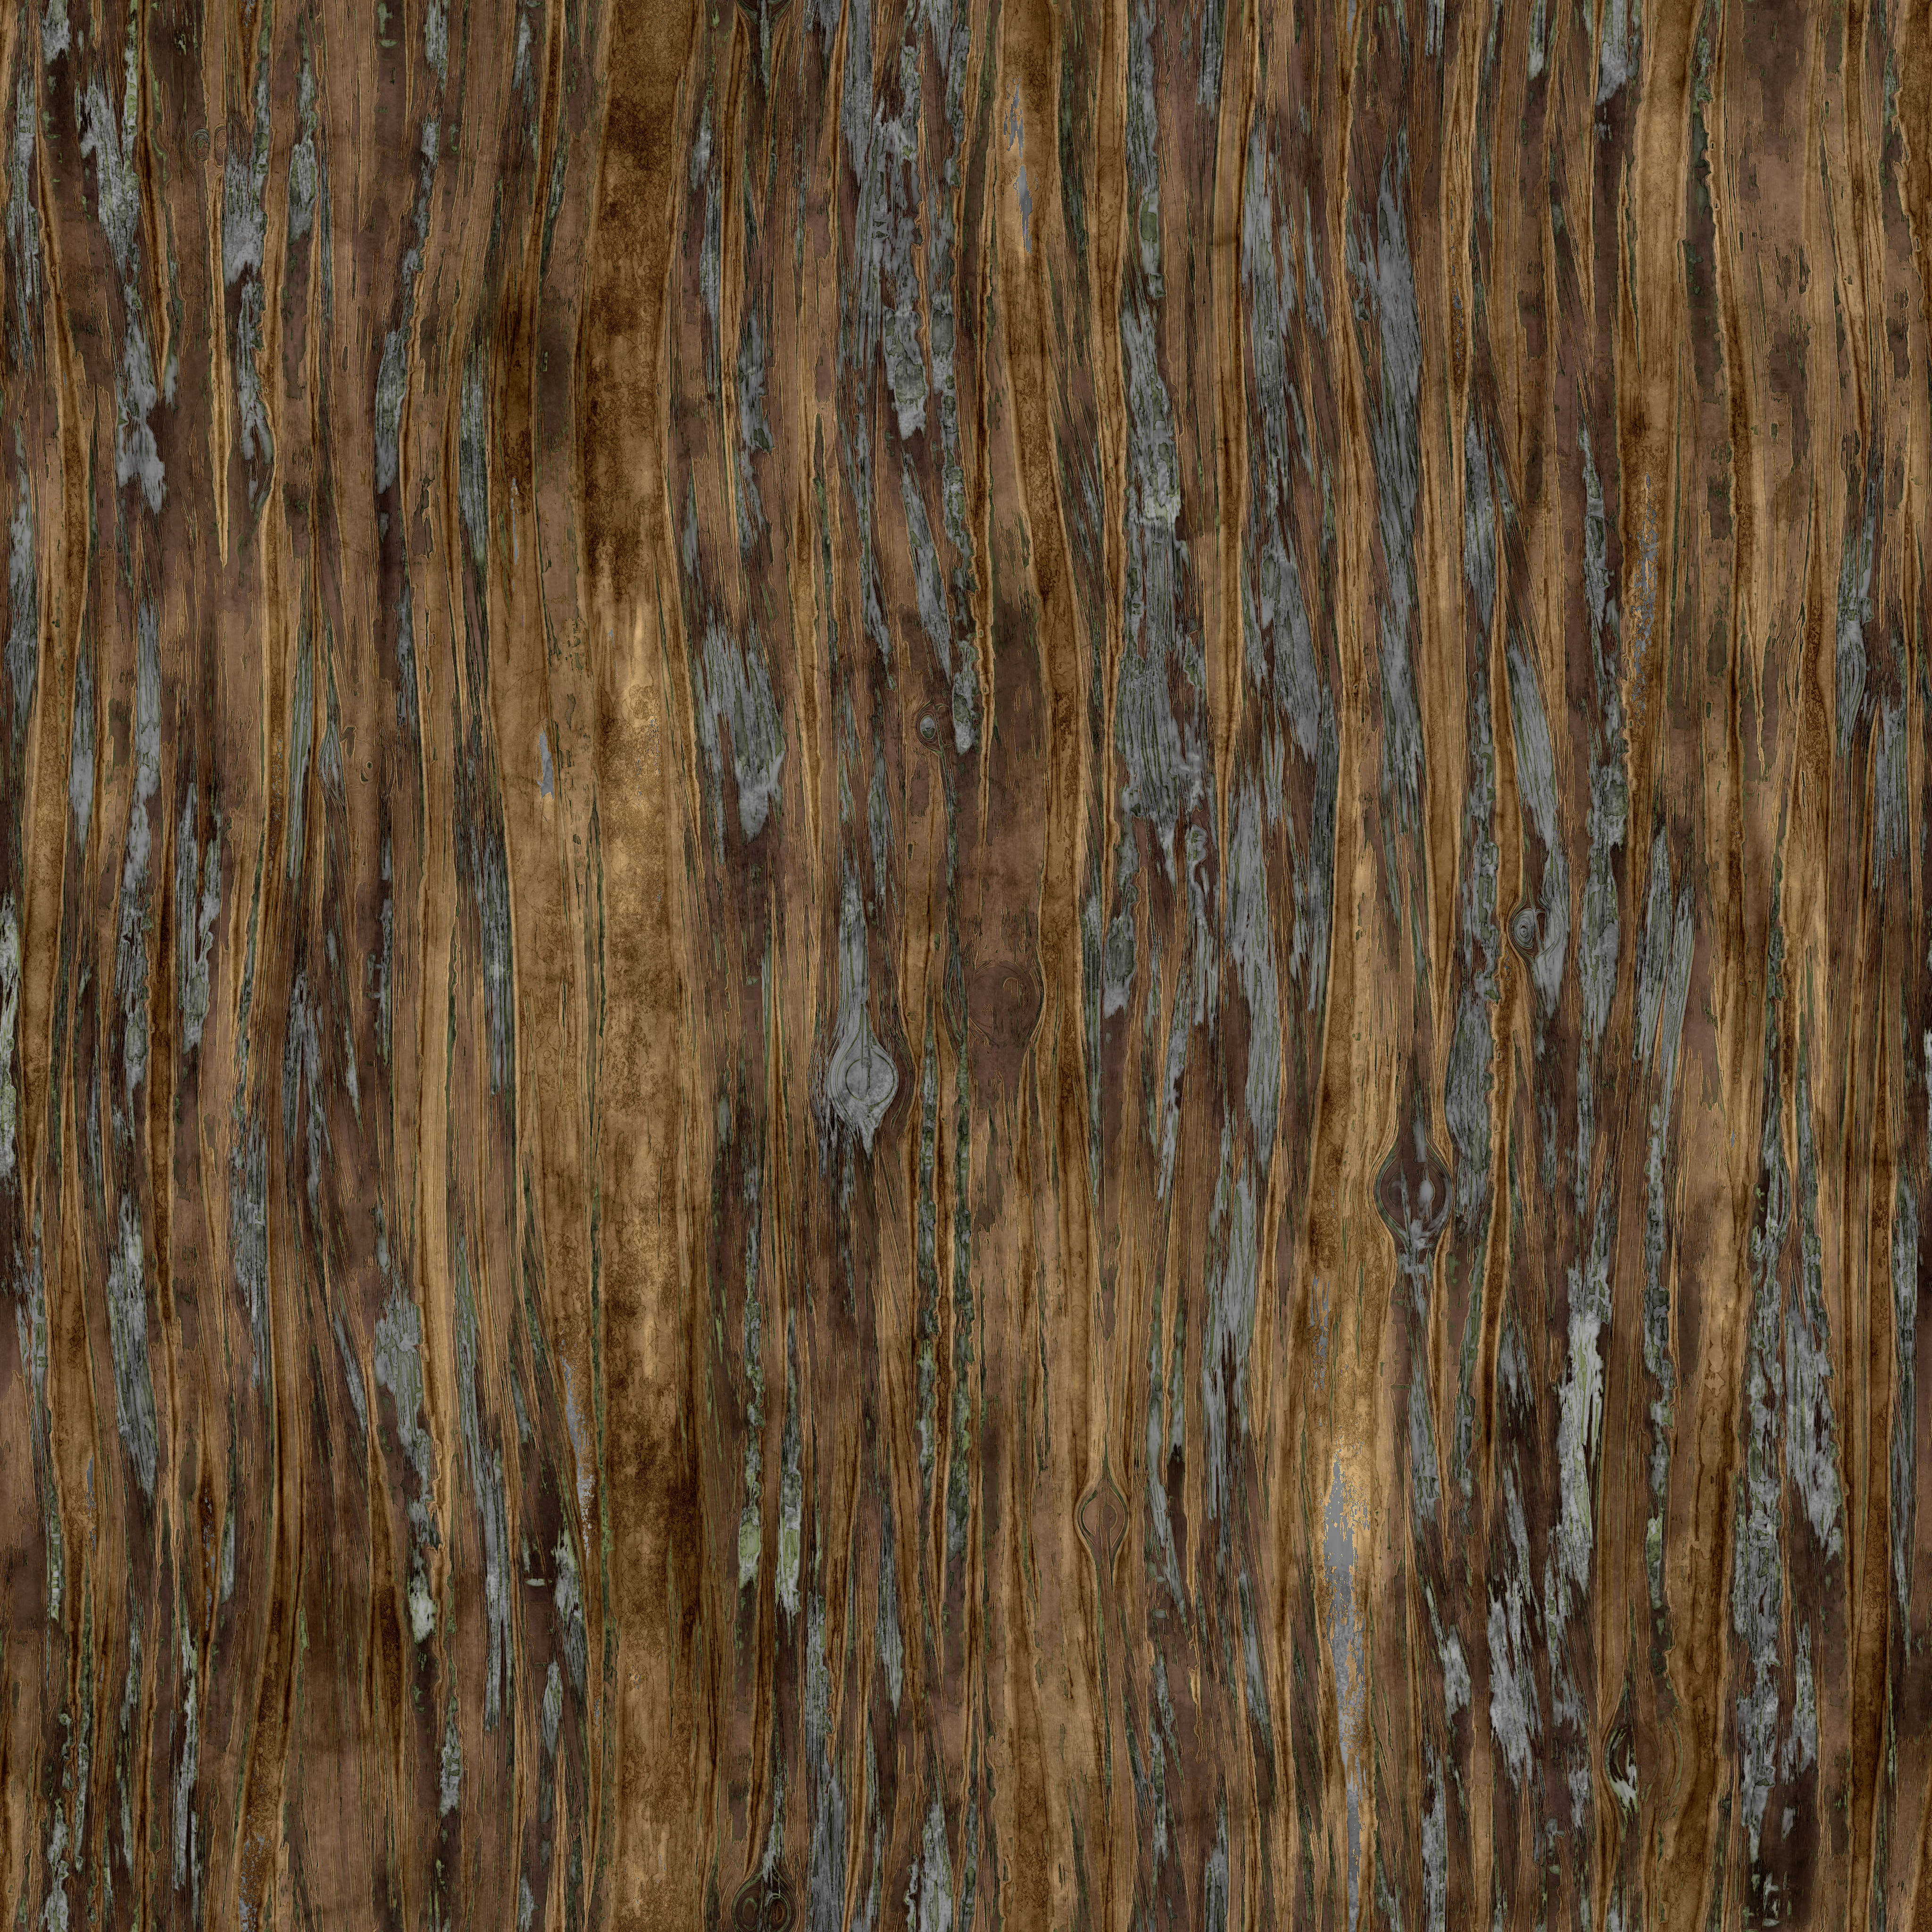 Tree Bark Texture Study – Matthew Fiveash